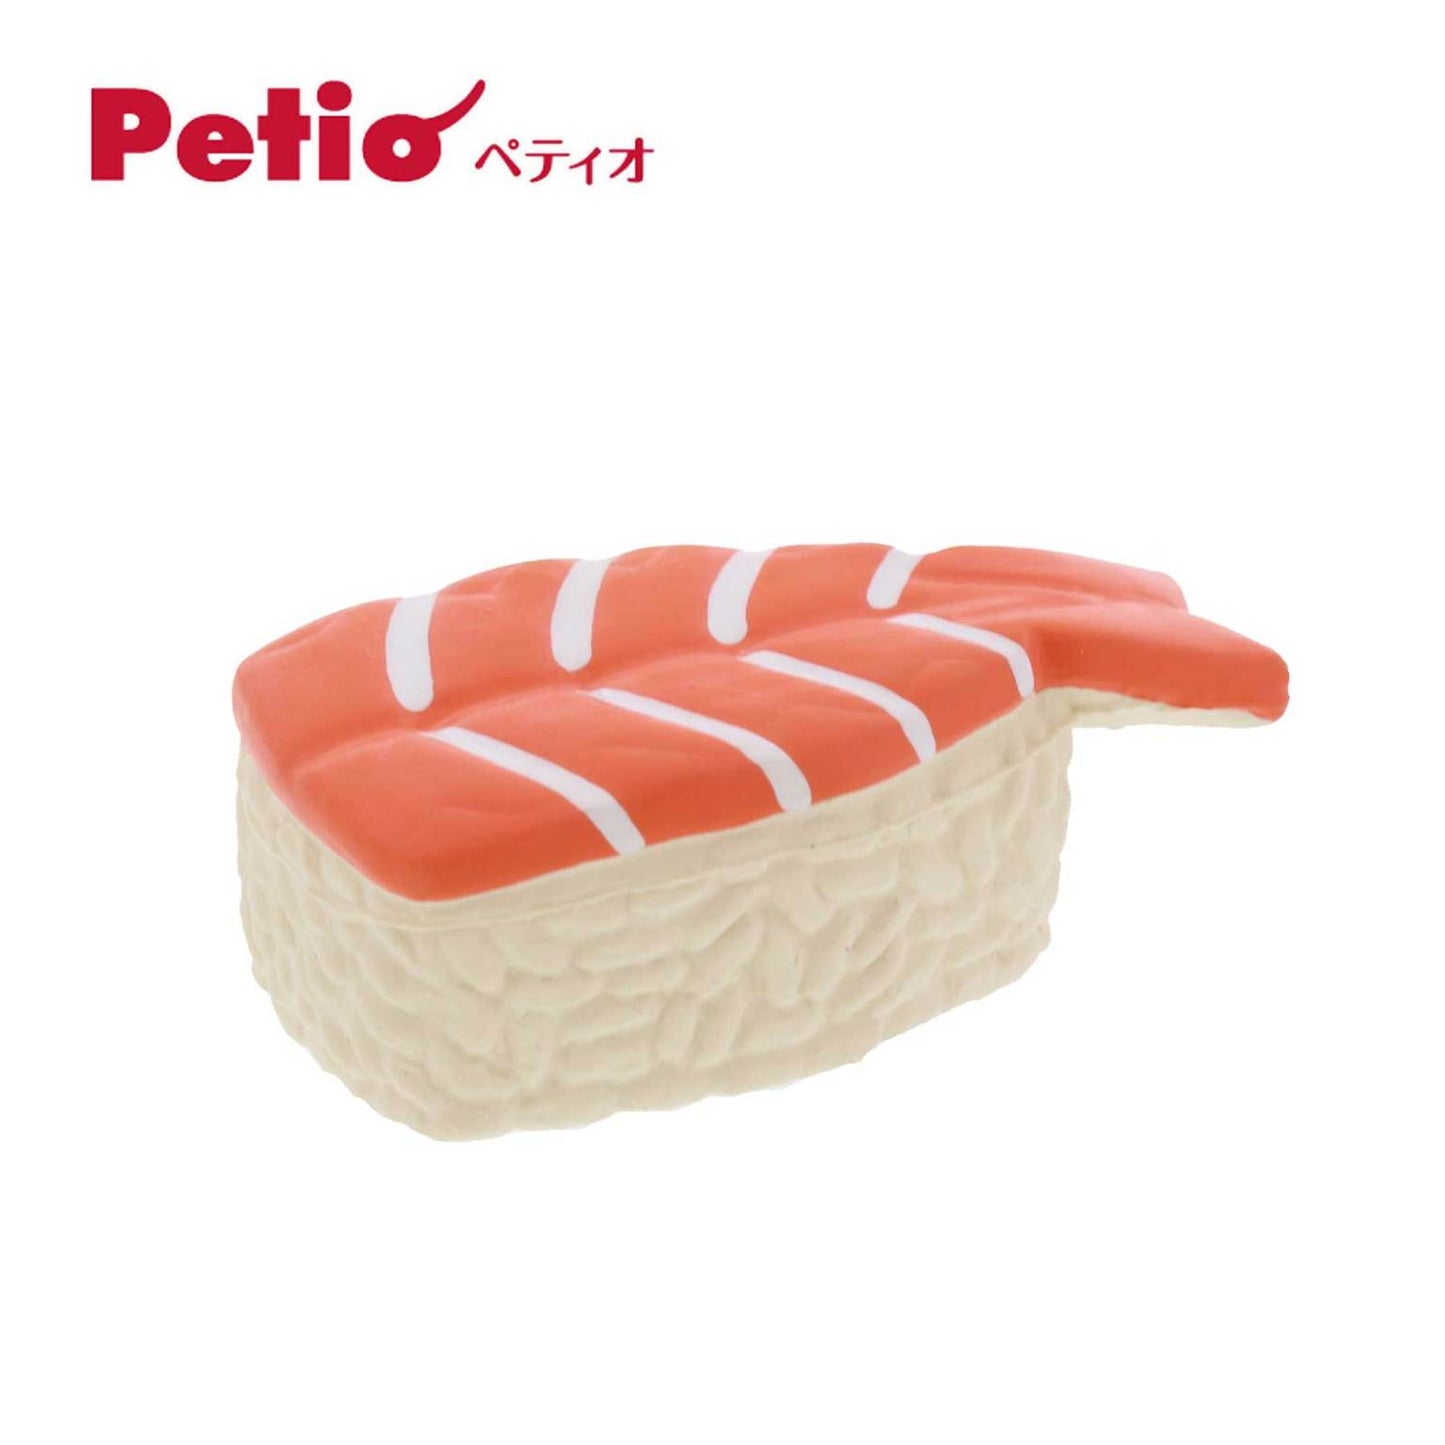 Petio Sushi Series Latex Squeaky Dog Toy Shrimp